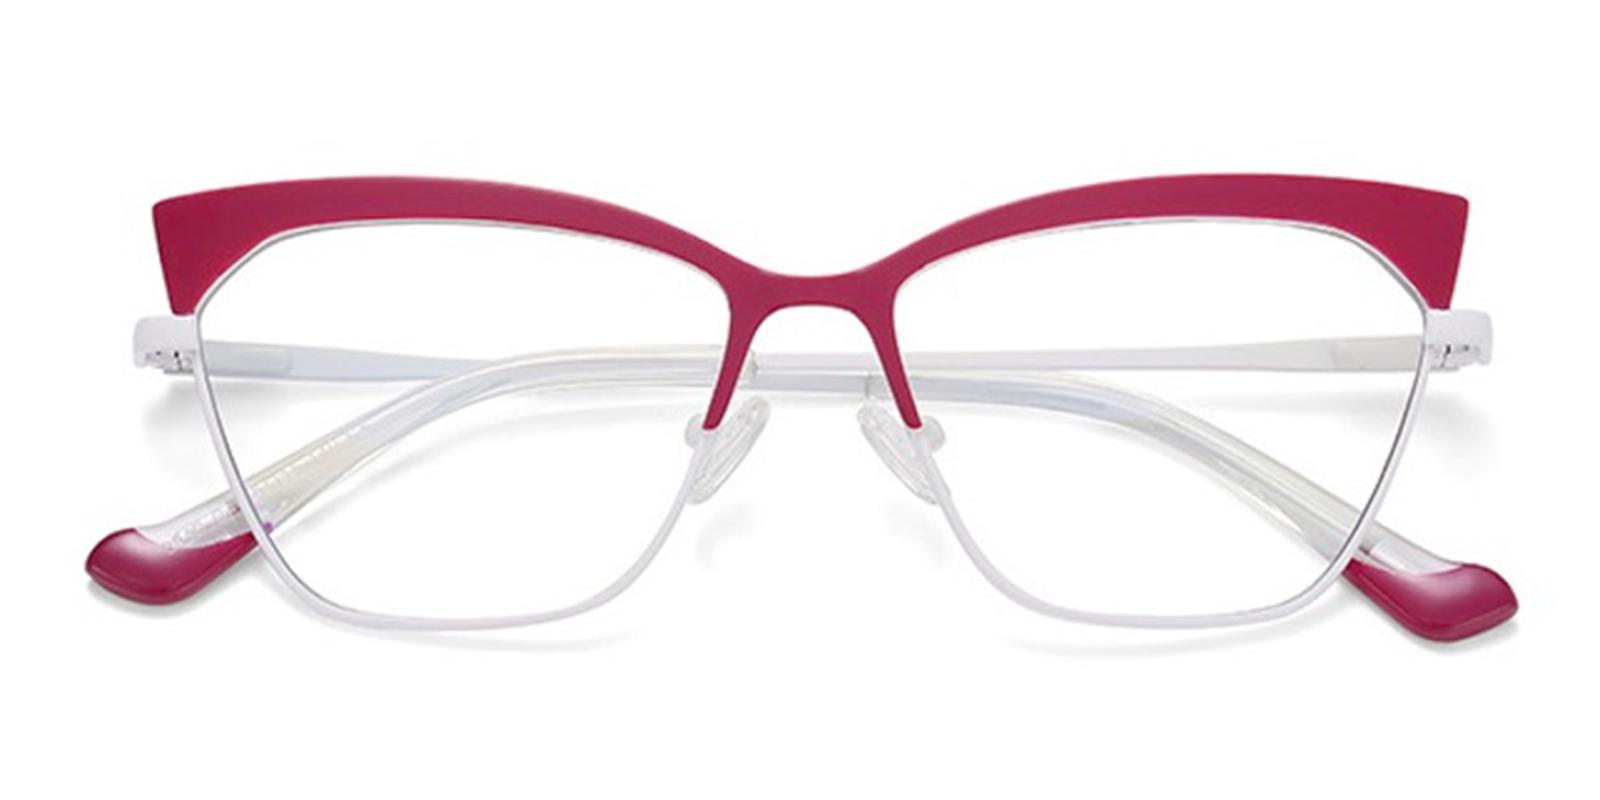 Tradla Red Metal Eyeglasses , NosePads , SpringHinges Frames from ABBE Glasses